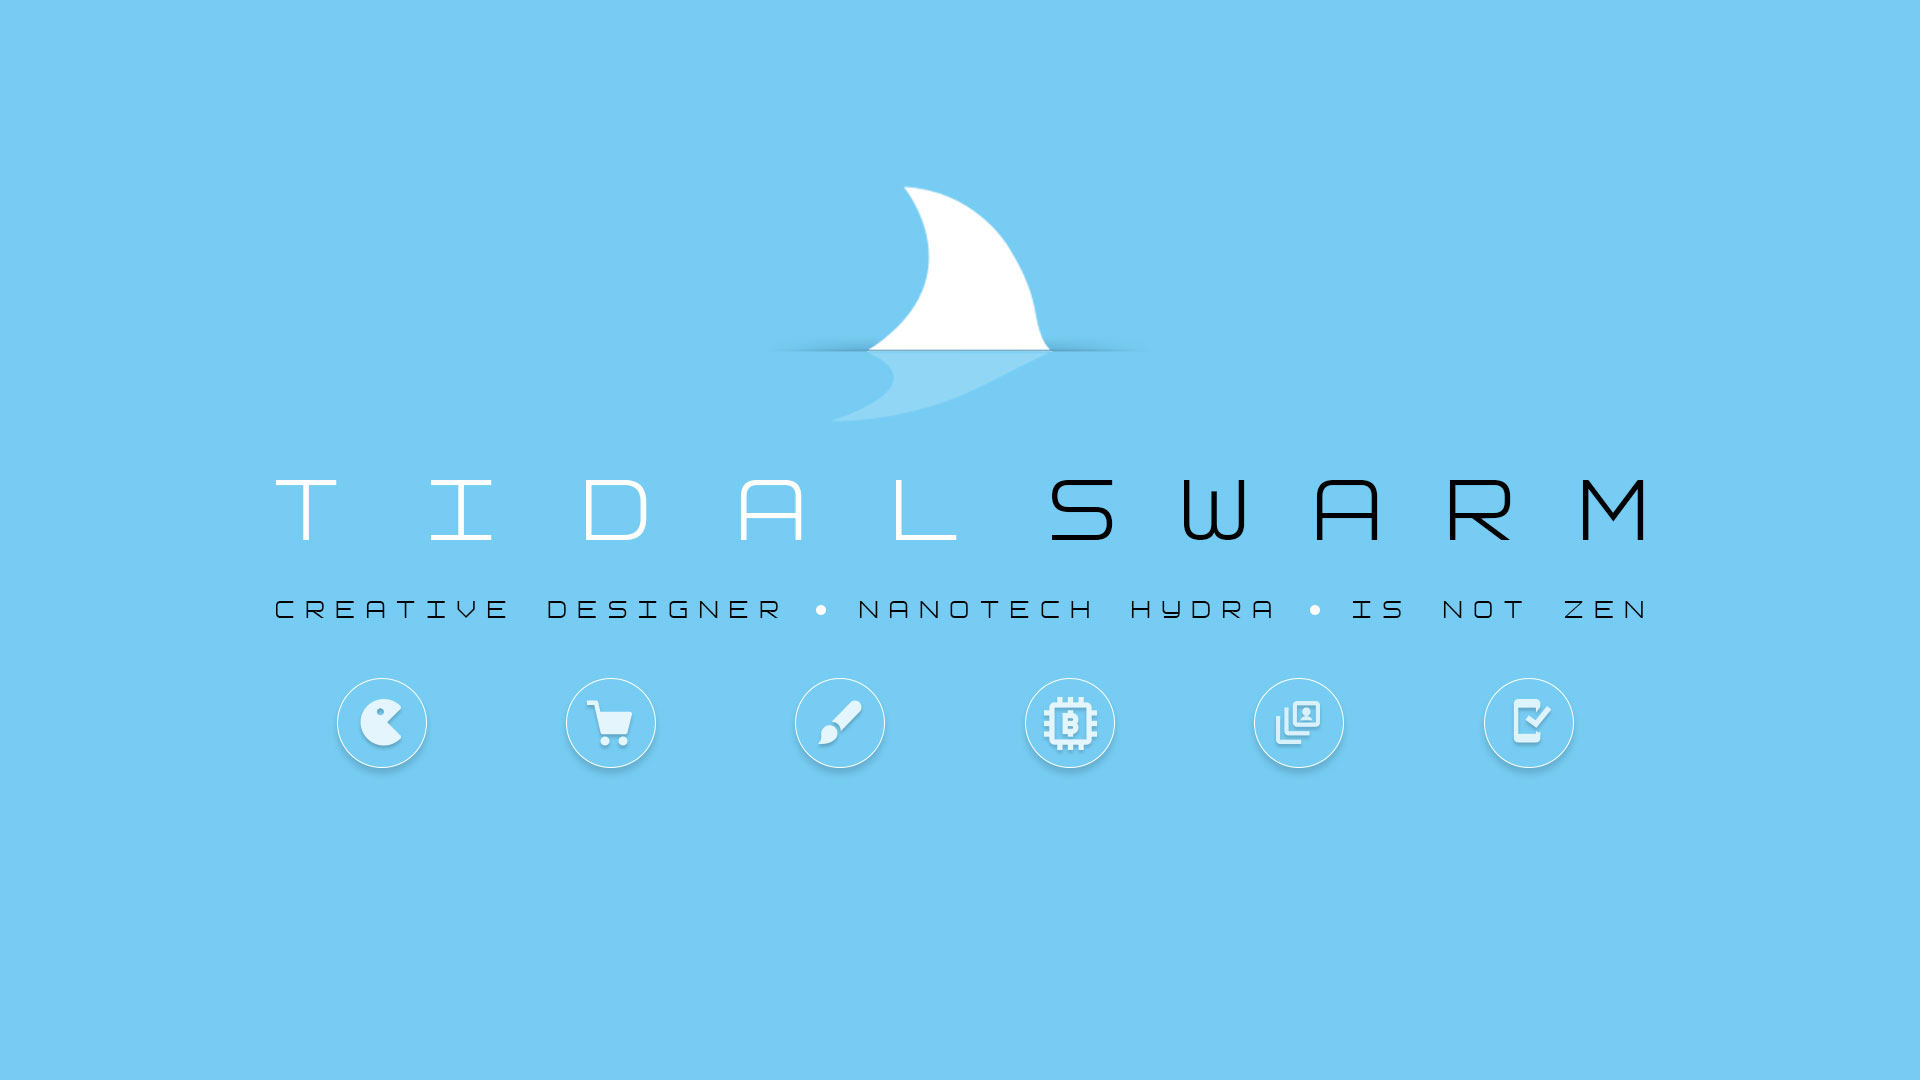 tidalswarm logo clear